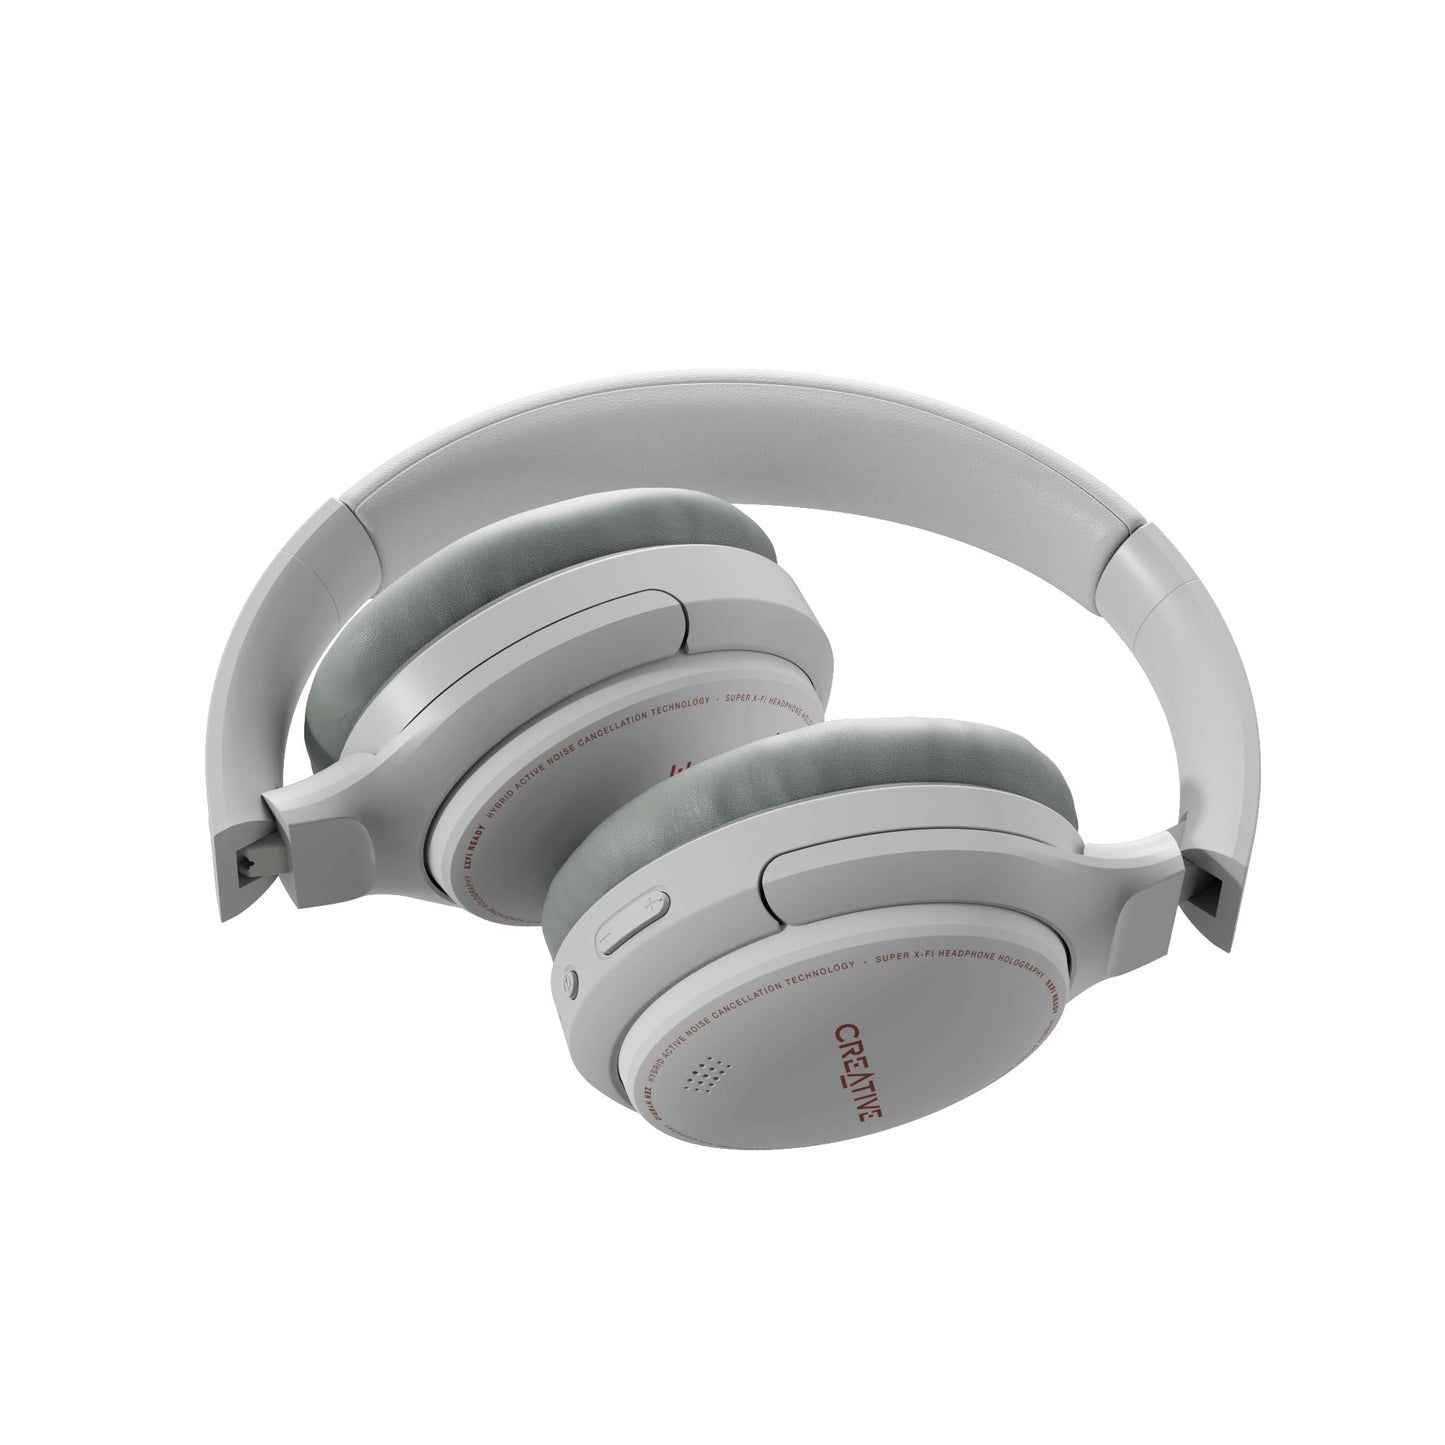 Creative Labs ZEN Hybrid Headset Wired & Wireless Head-band Calls/Music Bluetooth White